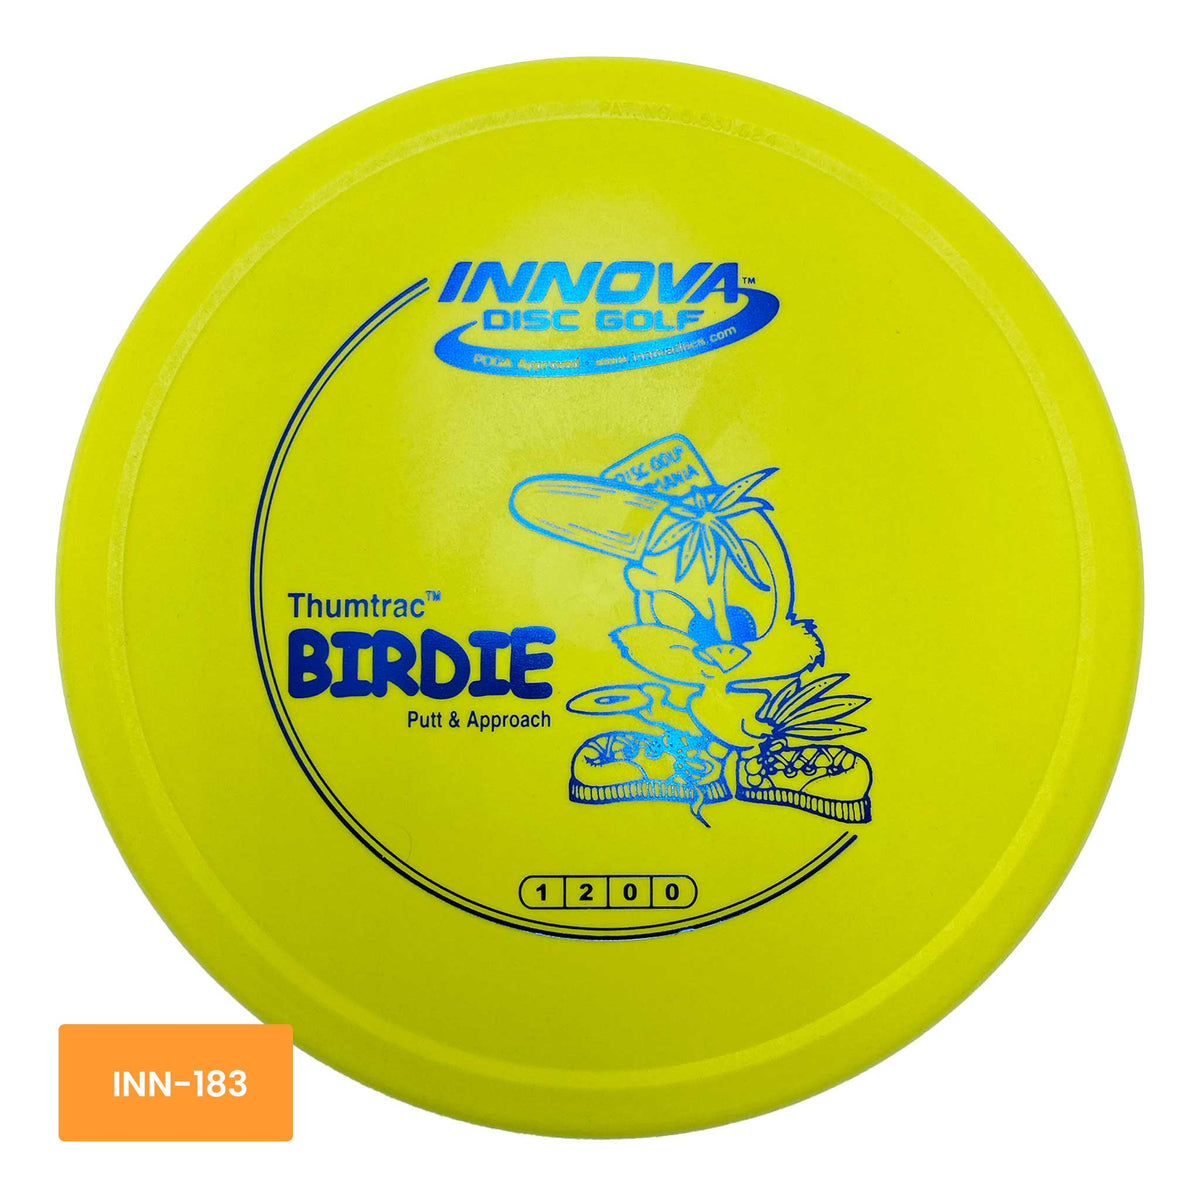 Innova Disc Golf DX Birdie putter and approach - Yellow / Blue